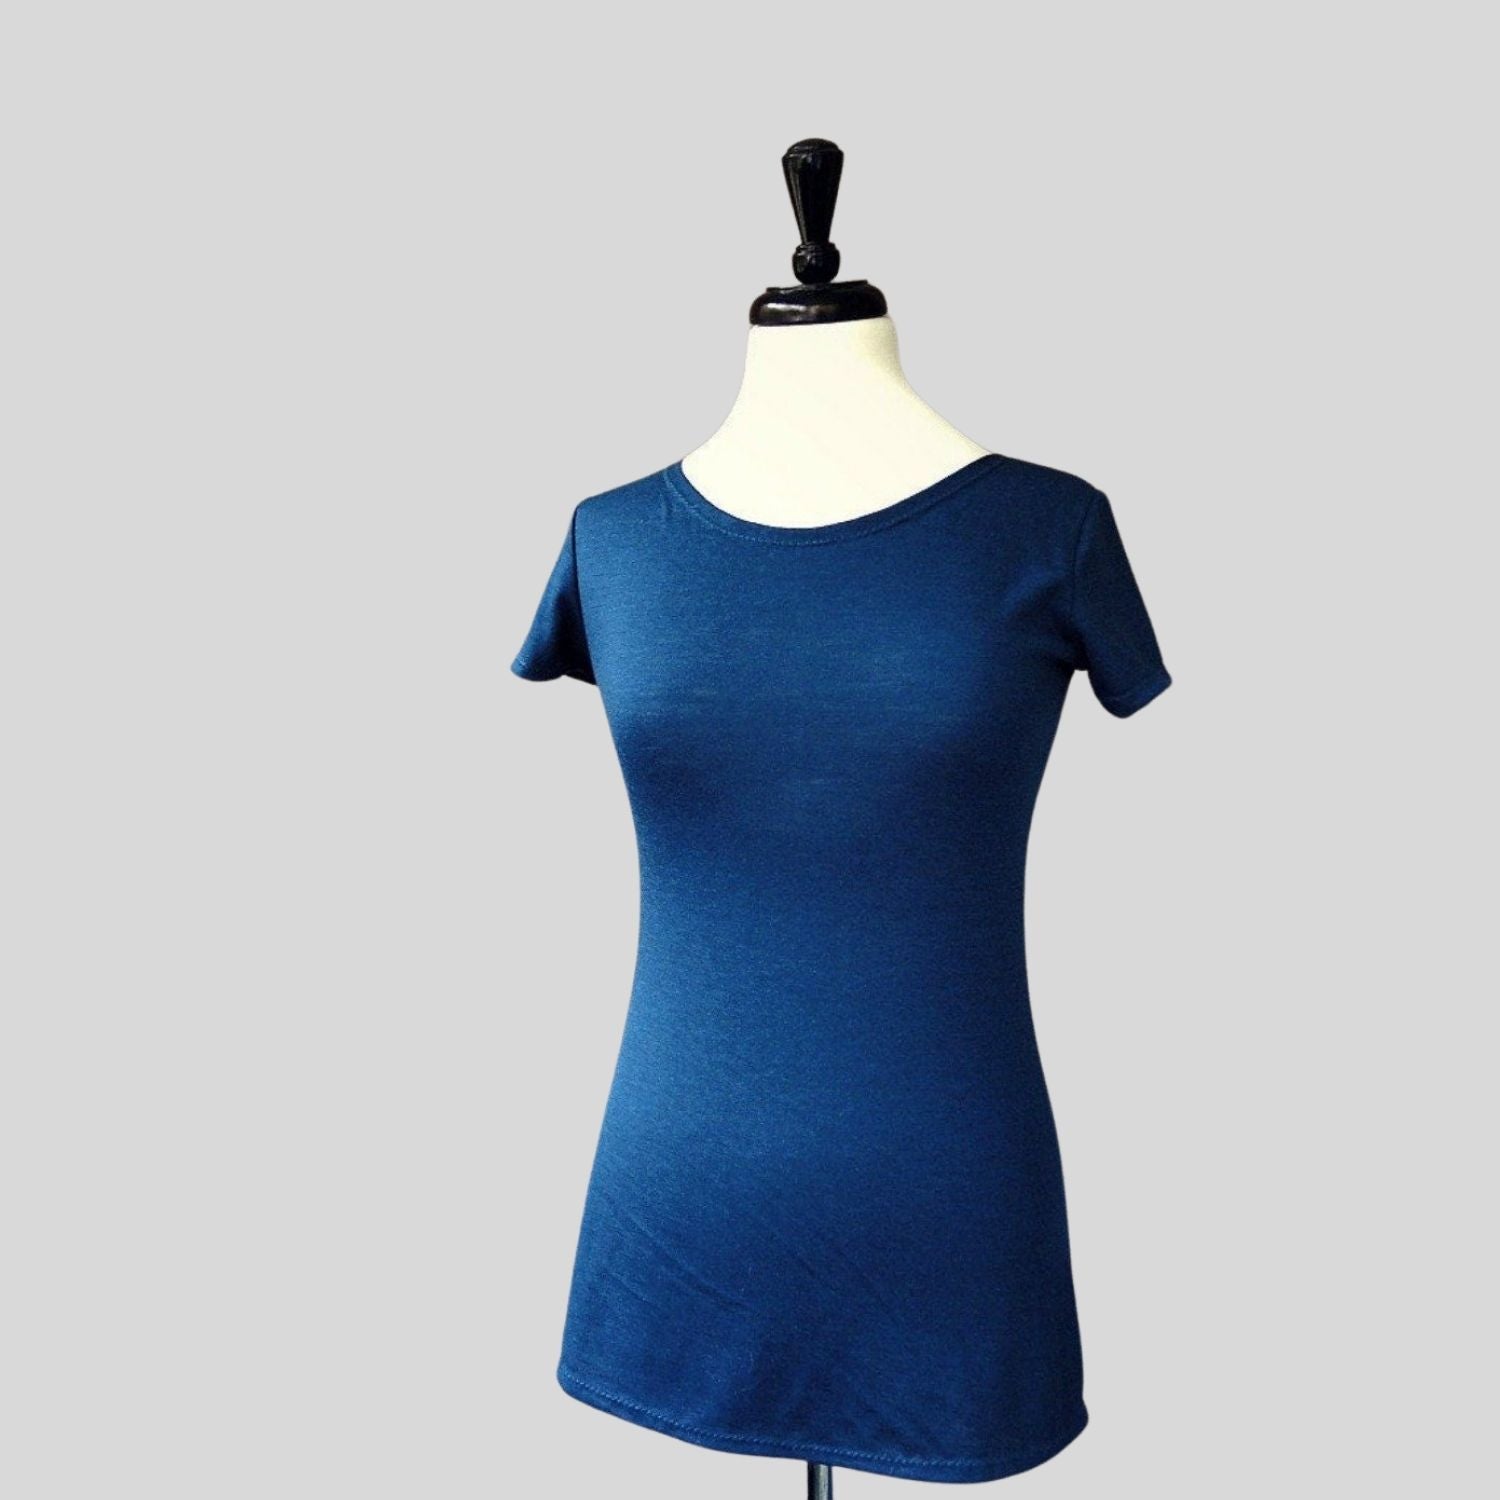 Women's wool t-shirt | Buy merino wool tops for women made in Canada ...